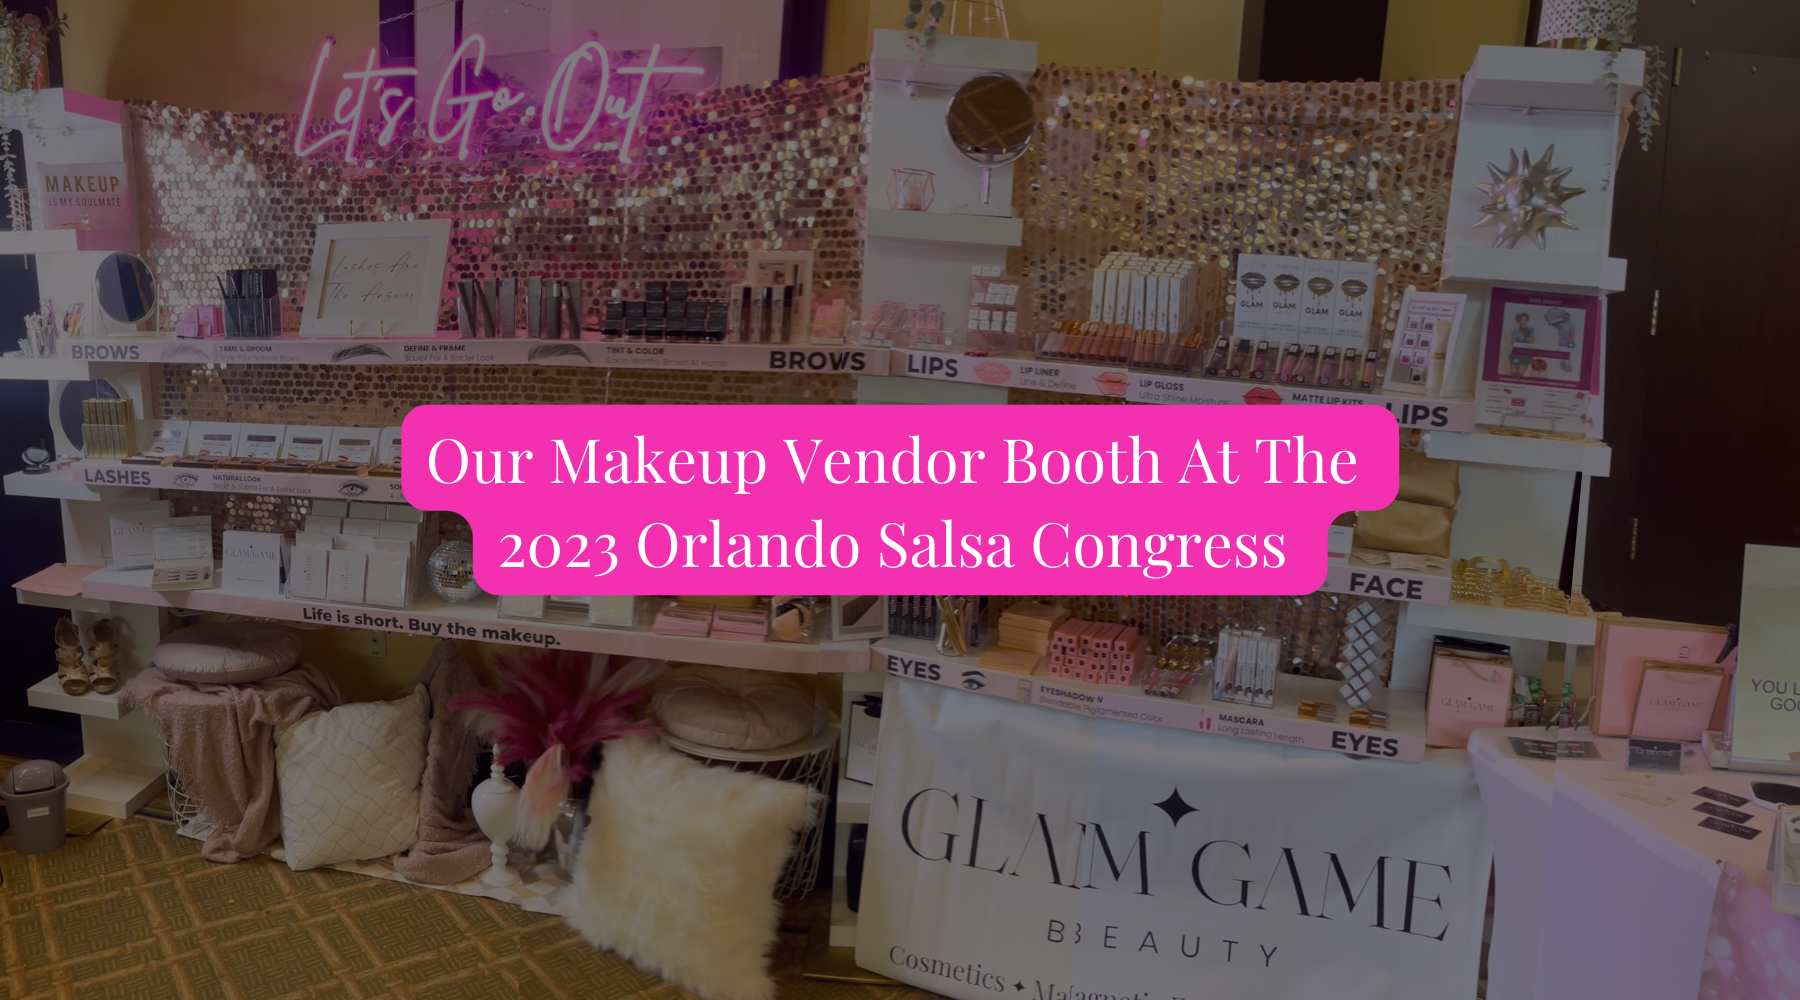 Glam Game Makeup Vendor Booth At the 2023 Orlando Salsa Congress